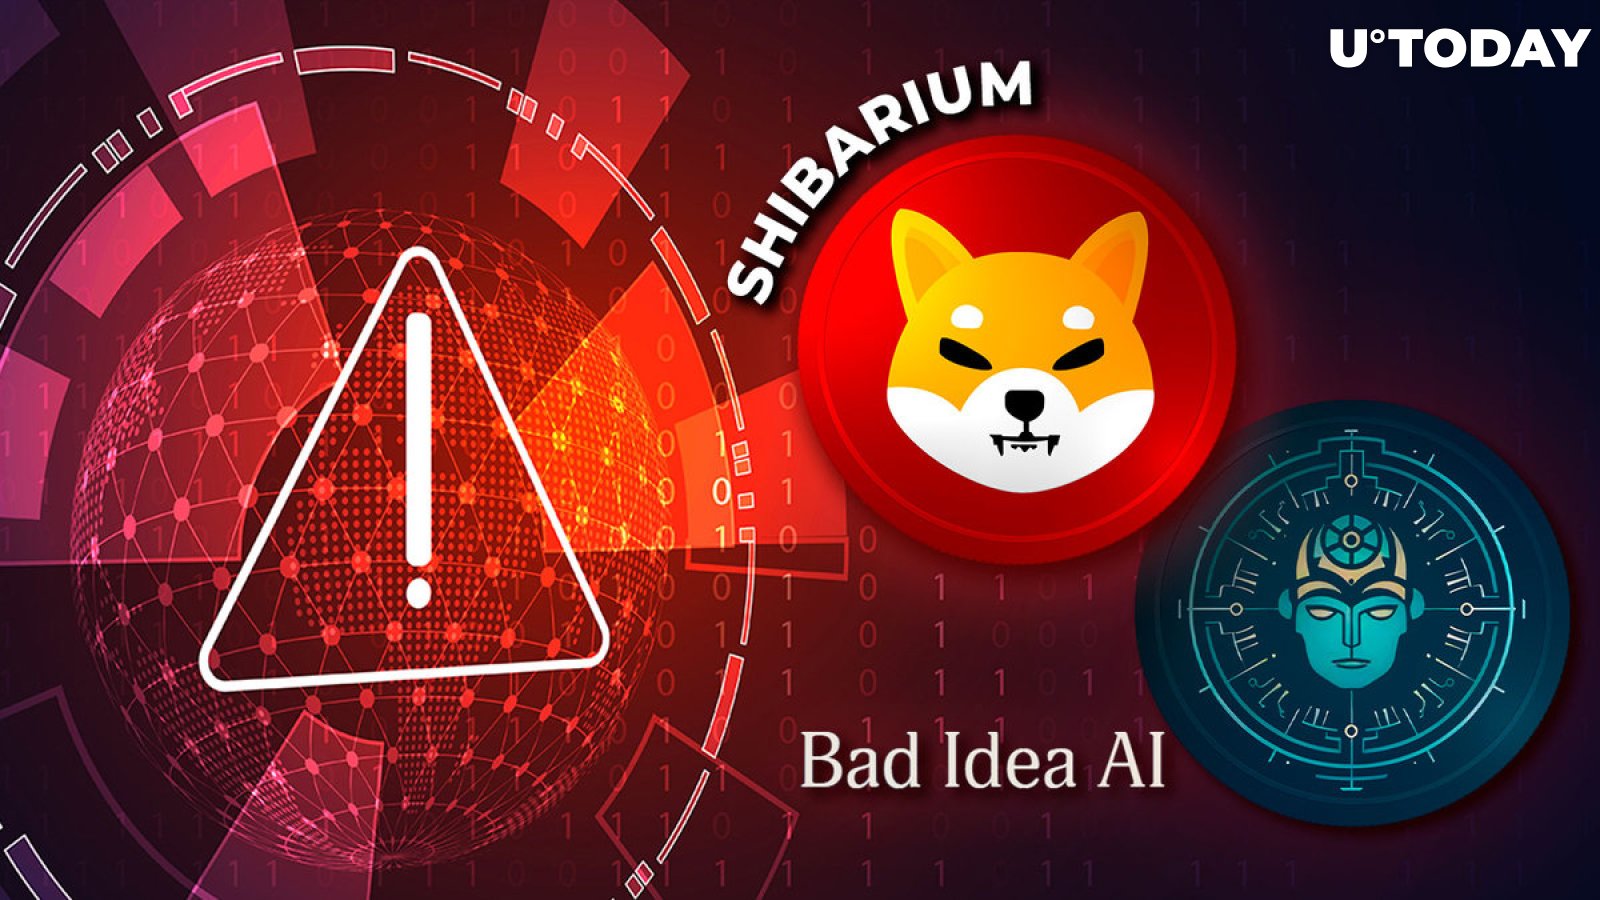 Shiba Inu: No Bad Idea AI (BAD) on Shibarium, SHIB Team Issues Warning